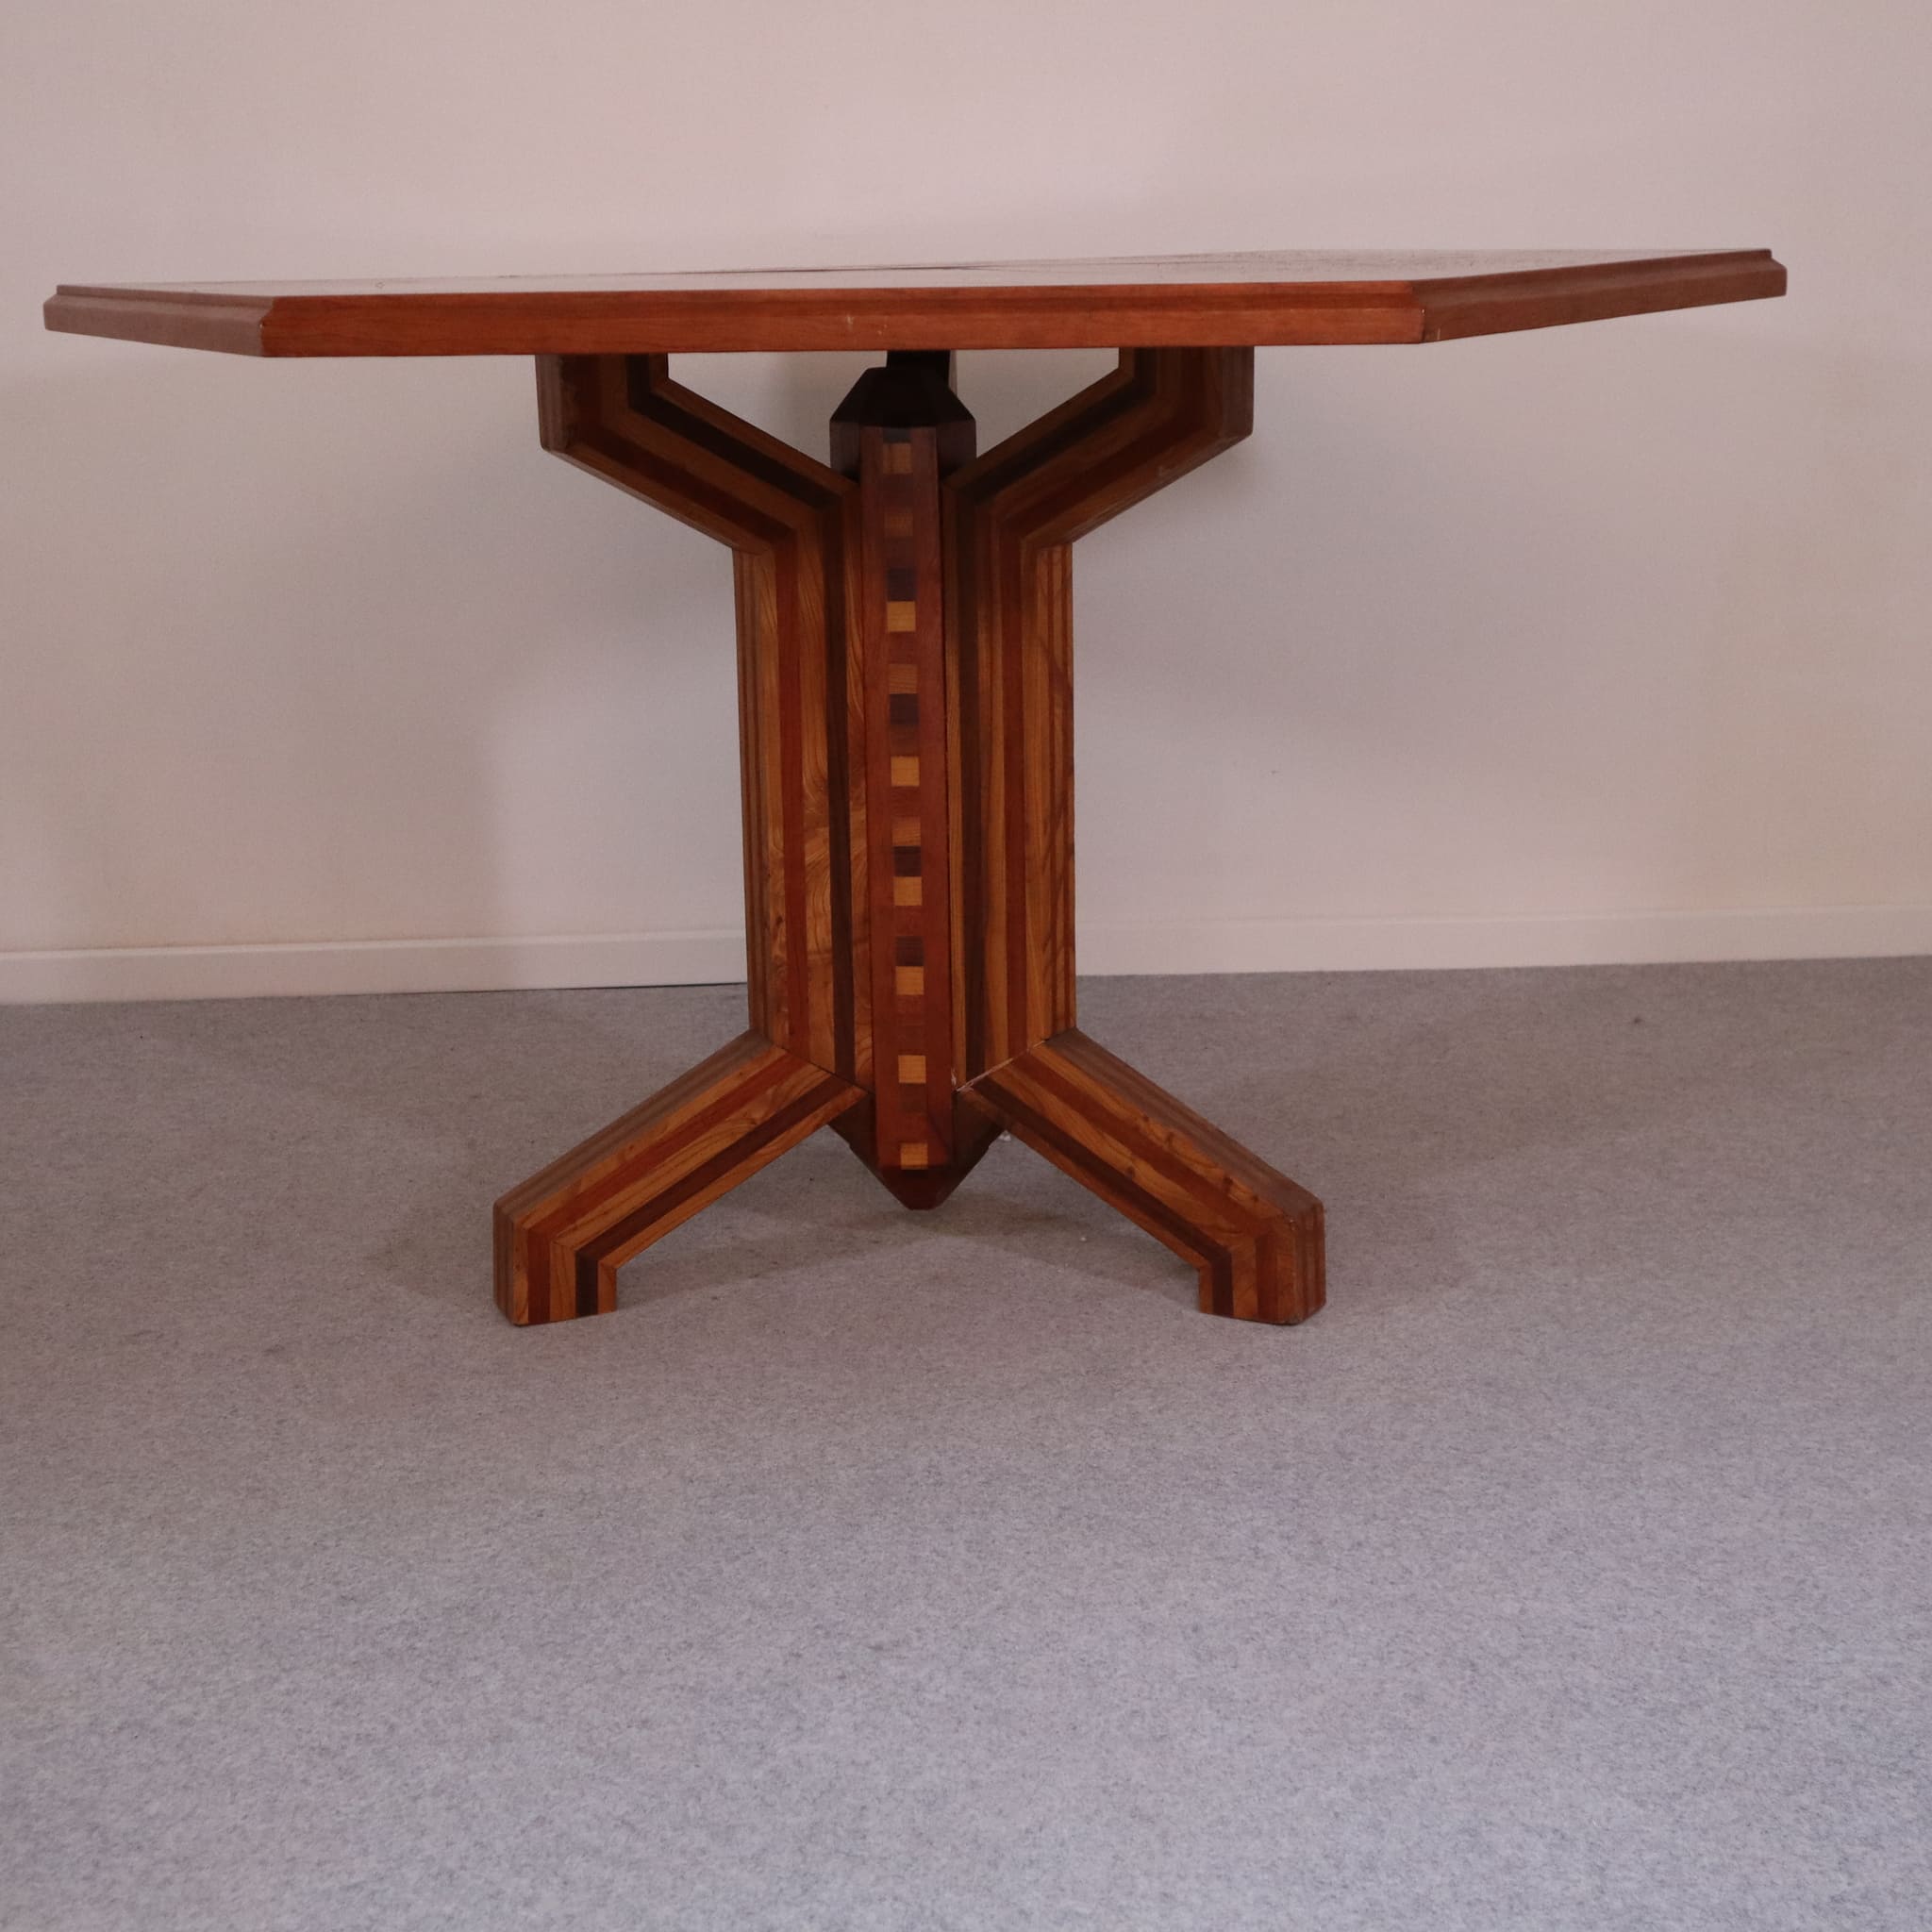 visionidepoca-visioni-depoca-table-wood-unique-monasteri-octagonal-70s-furniture-made-italy-modern-vintage-design-antiques-2